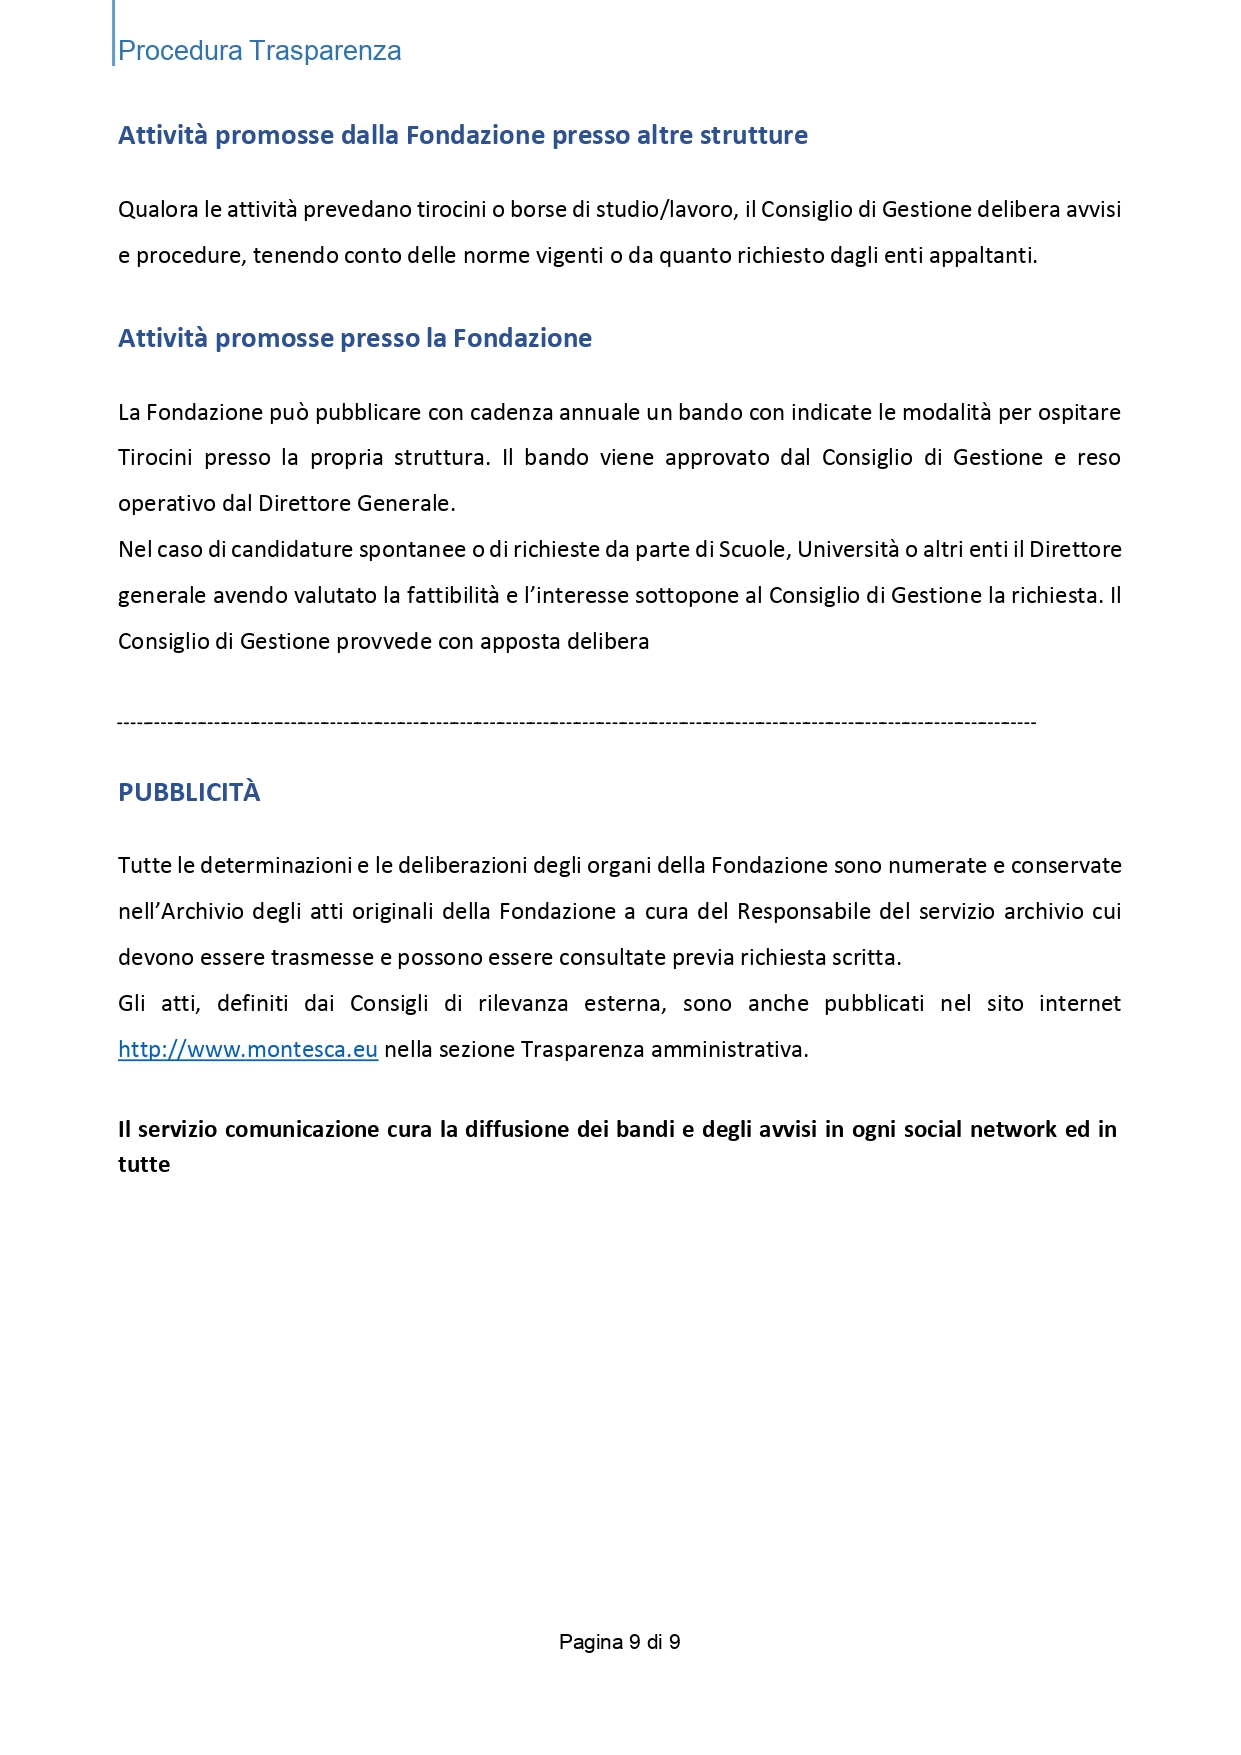 Procedura Trasparenza_110123_pages-to-jpg-0010